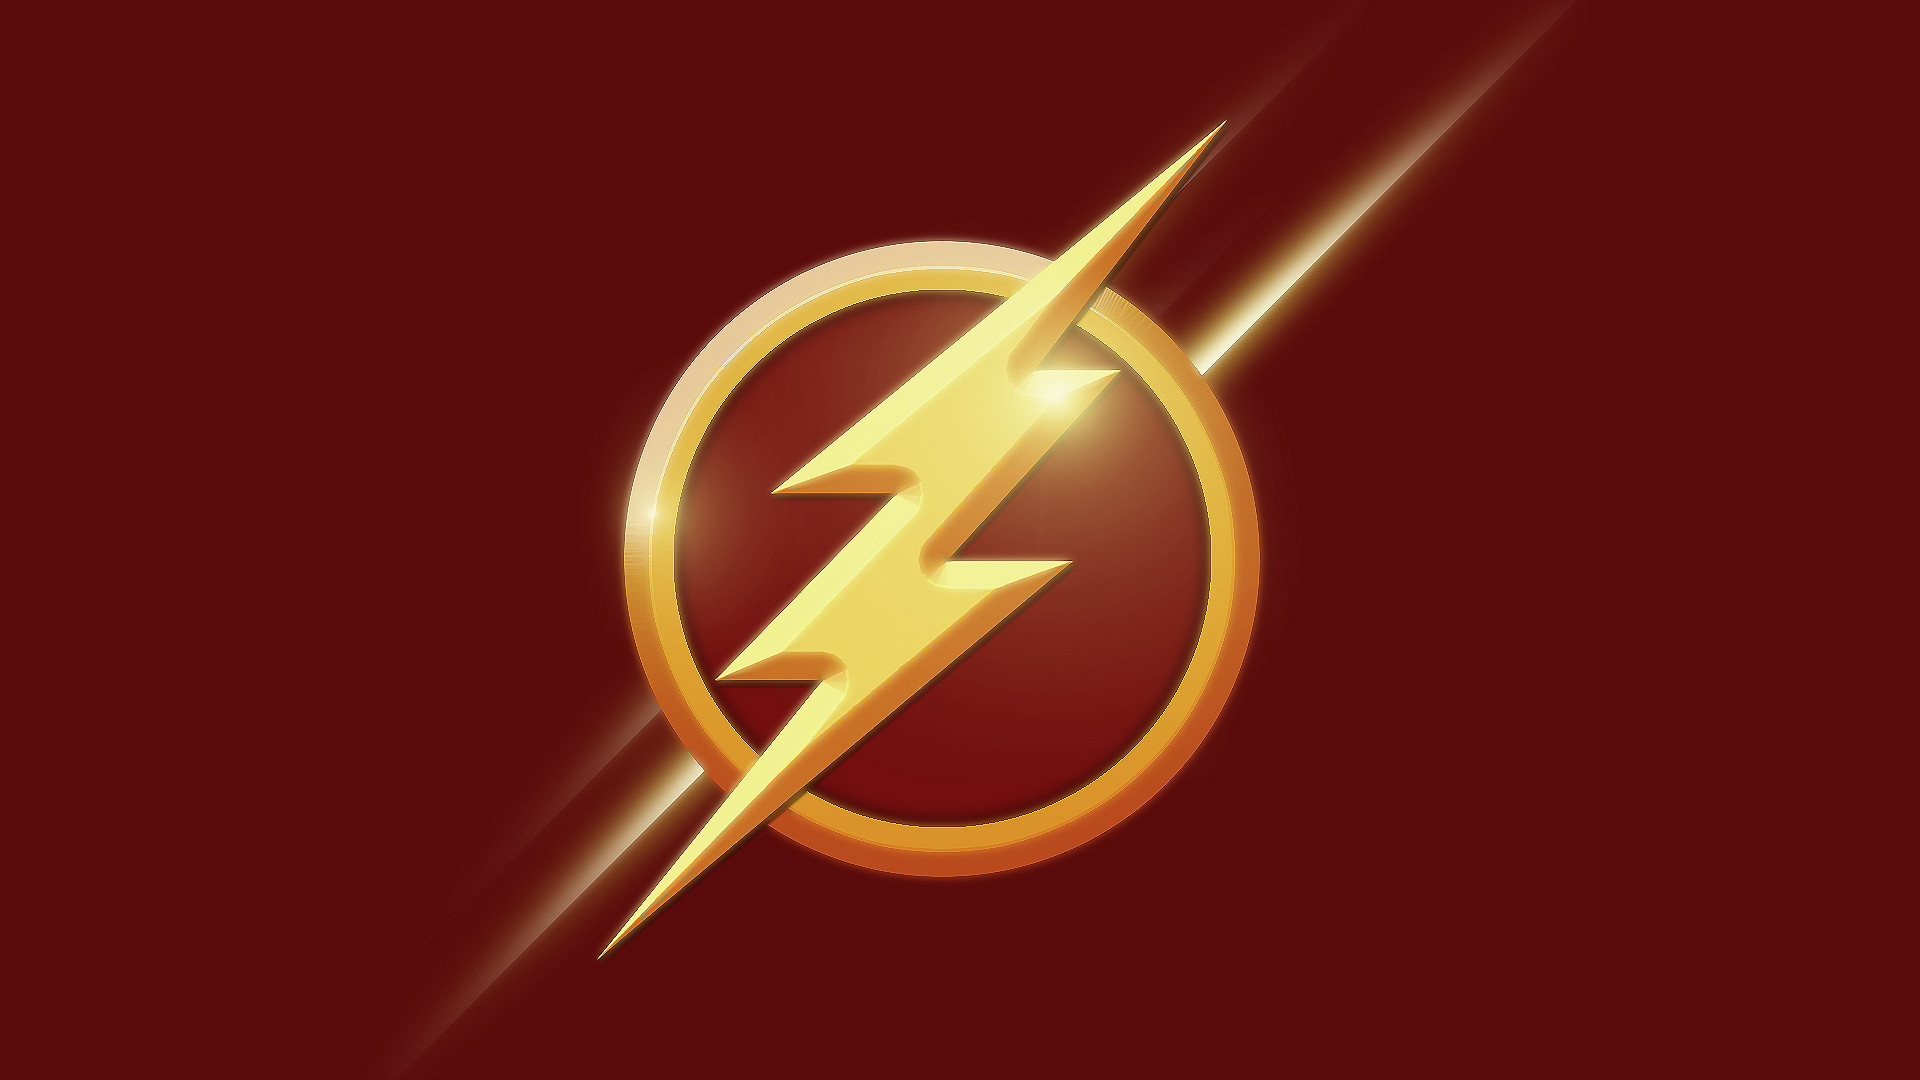 CW Flash iPhone Wallpaper